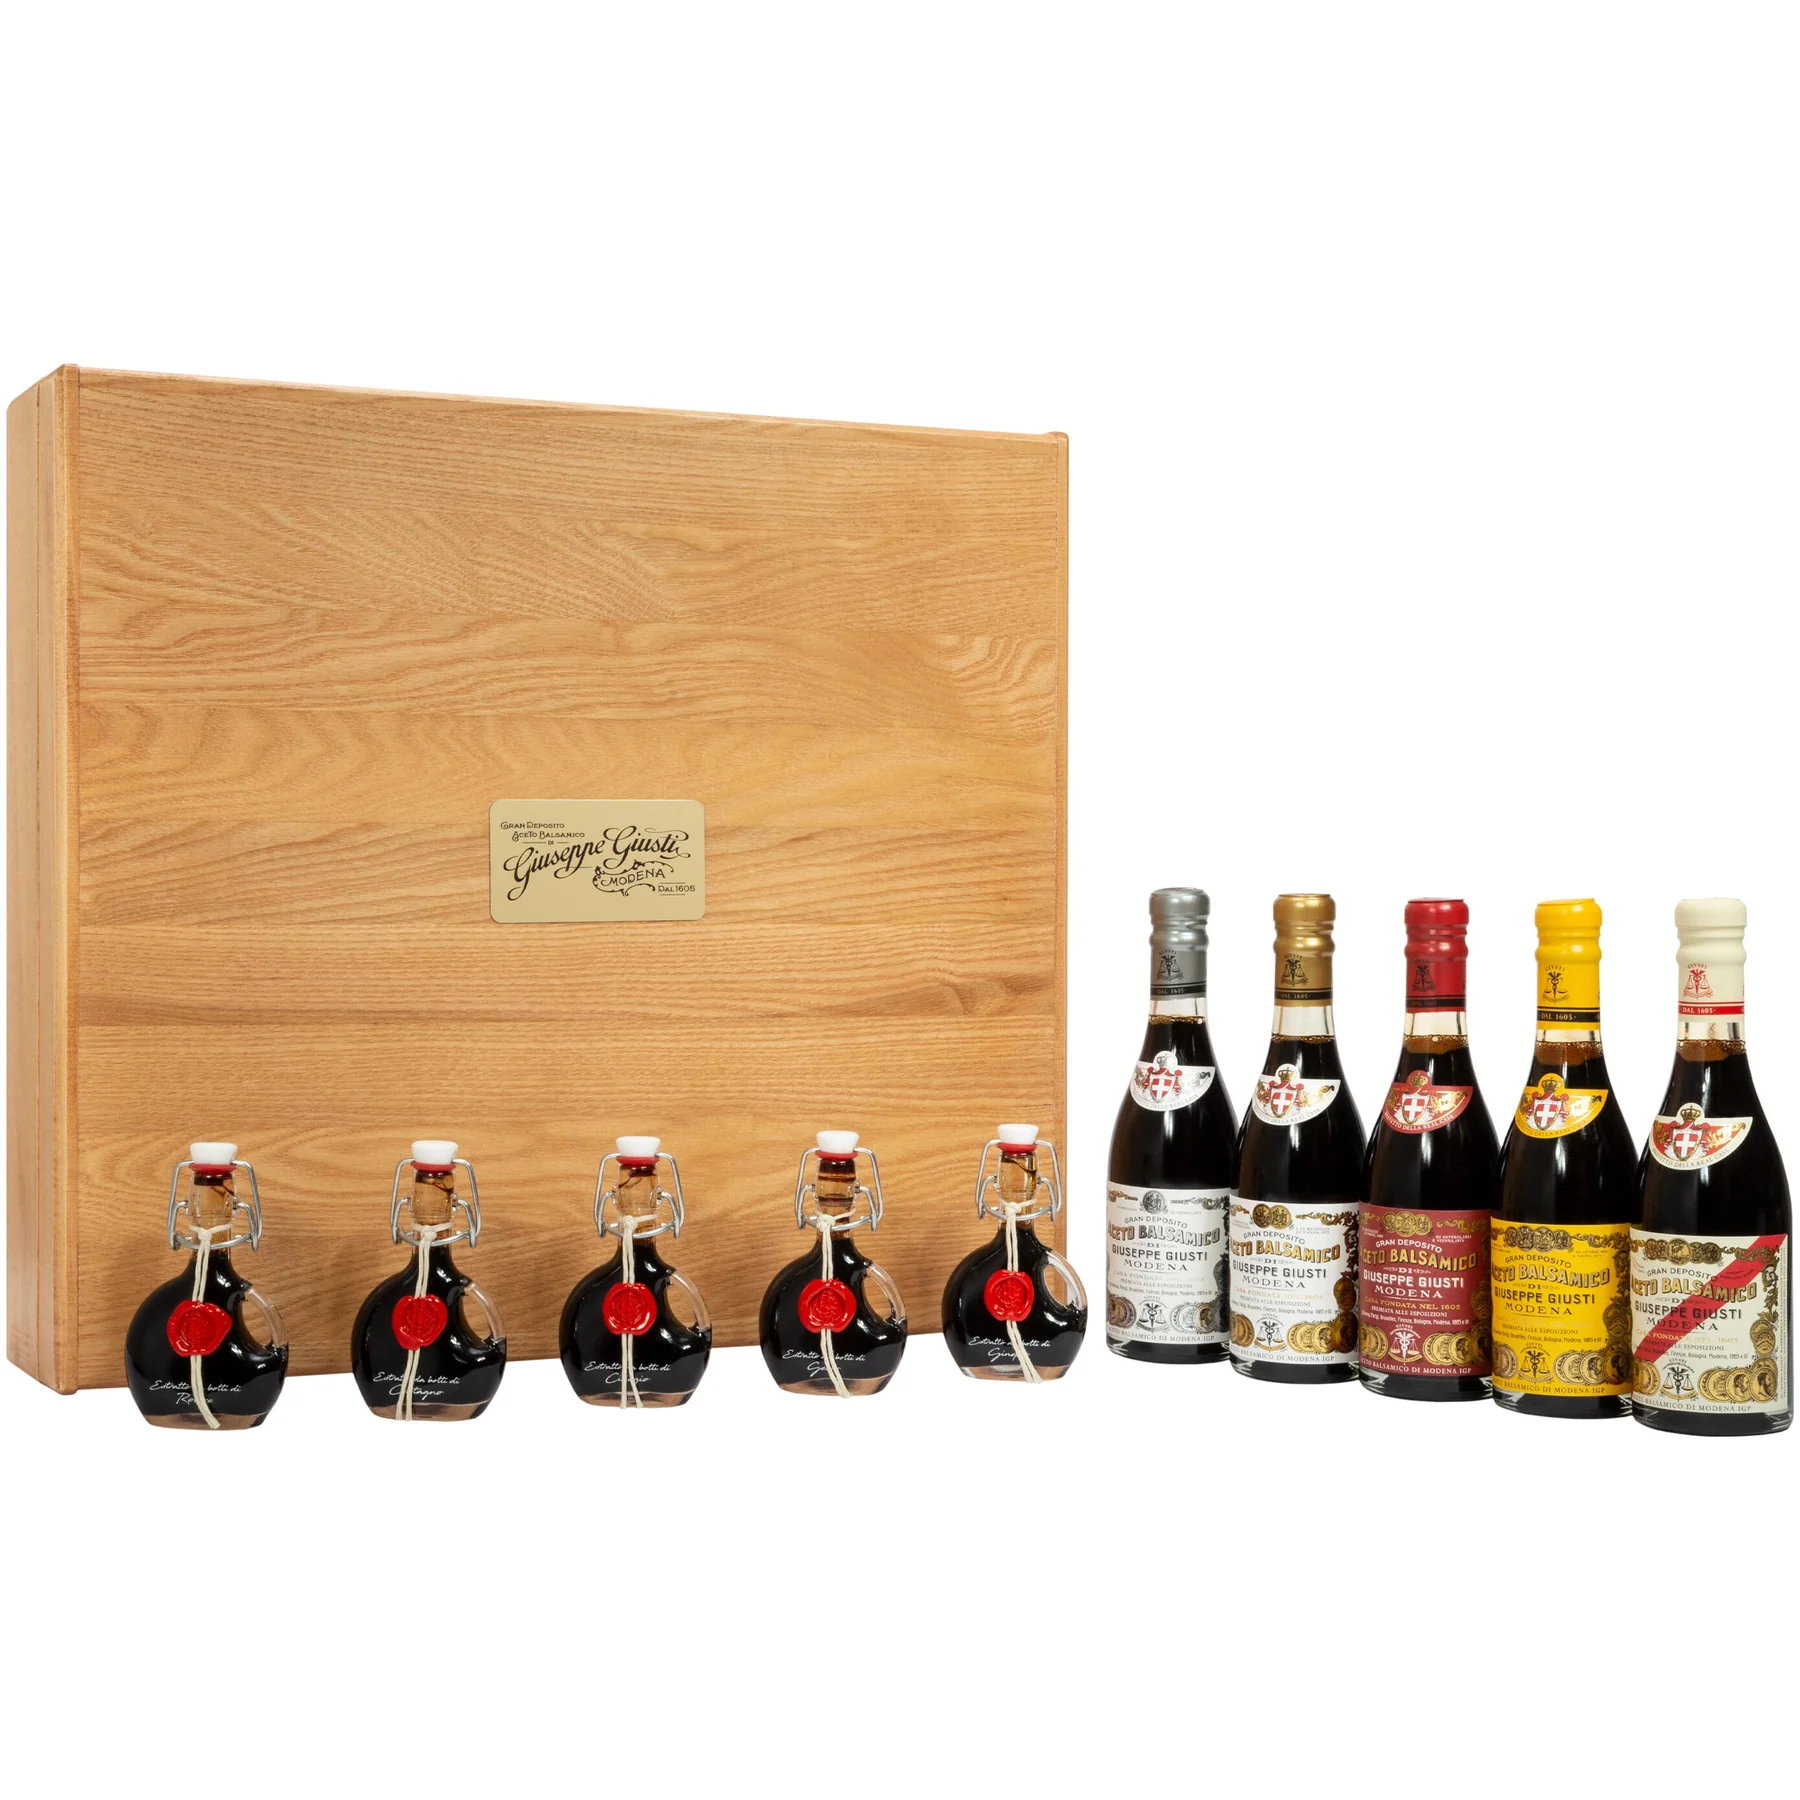 Giuseppe Giusti Lo Scrigno Balsamic Vinegar Collection Luxury Collection